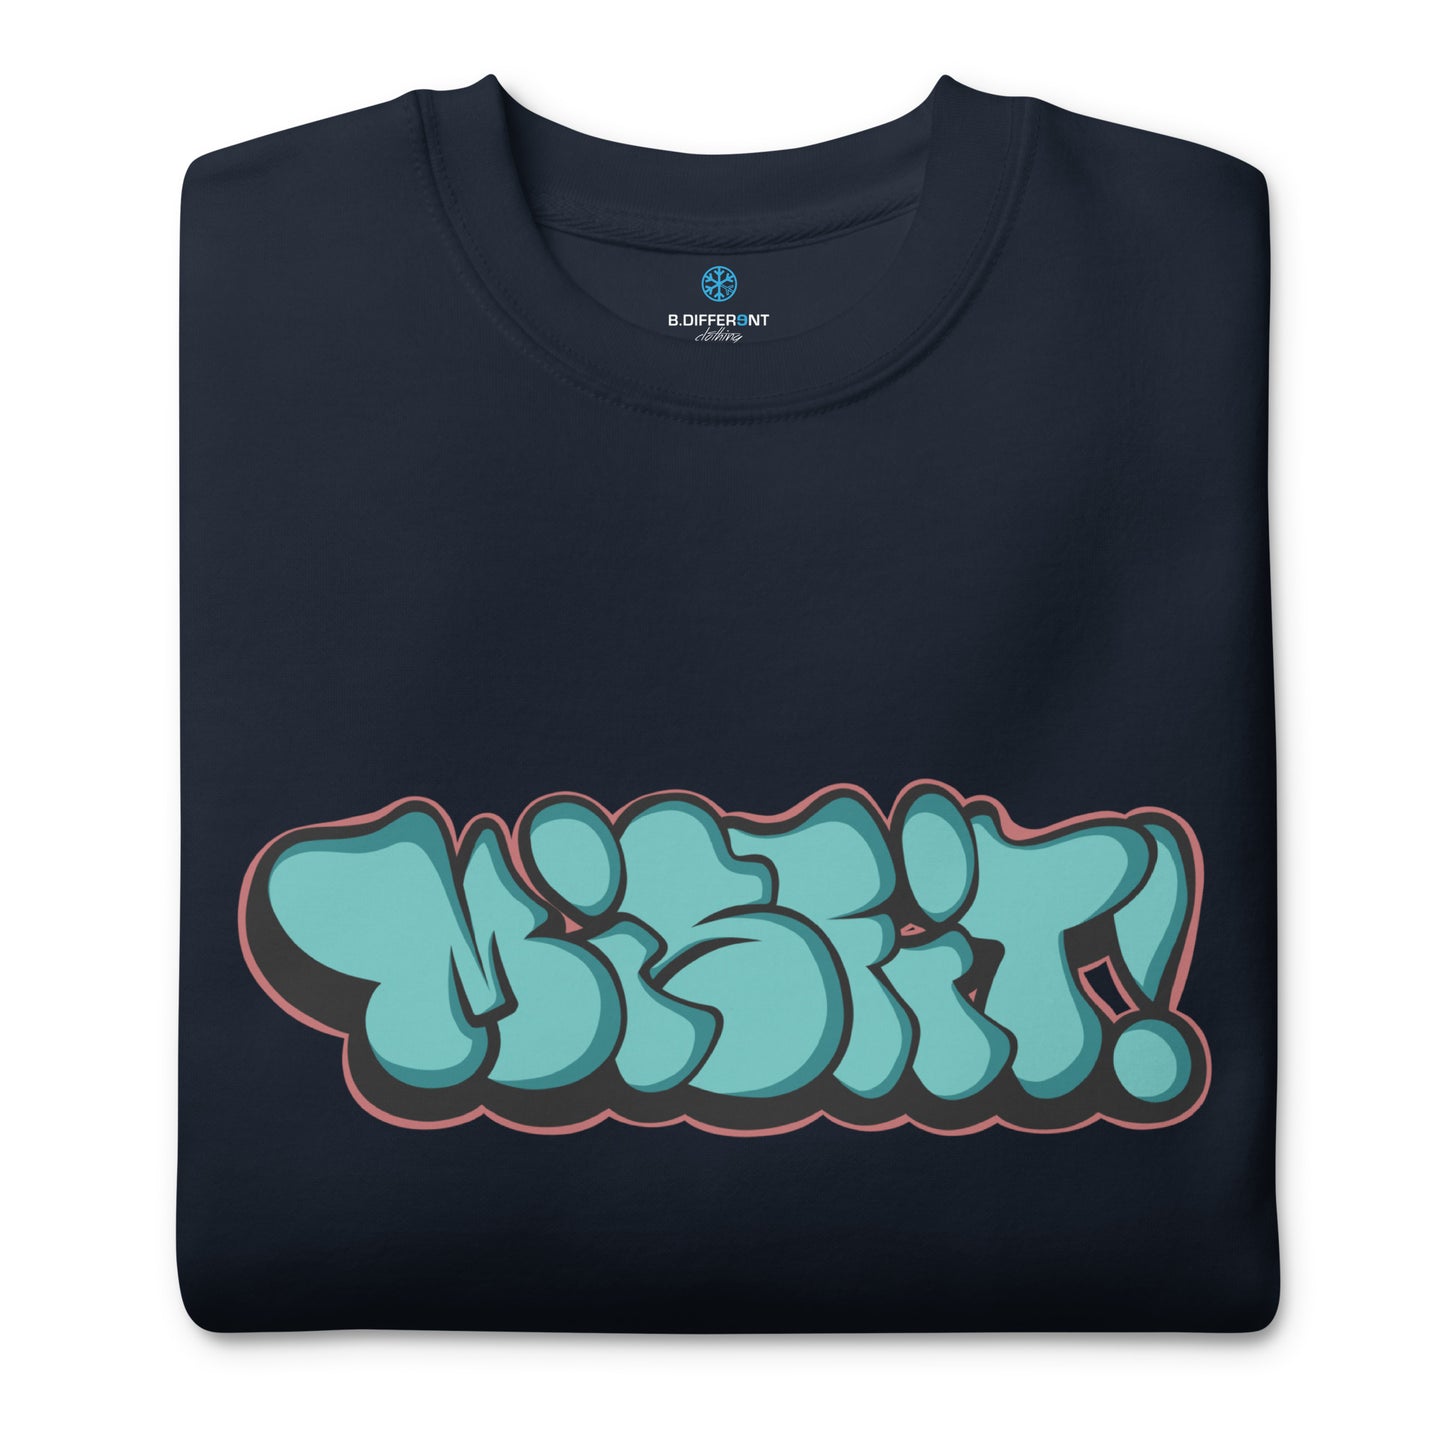 folded Misfit sweatshirt by B.Different Clothing street art graffiti inspired streetwear brand